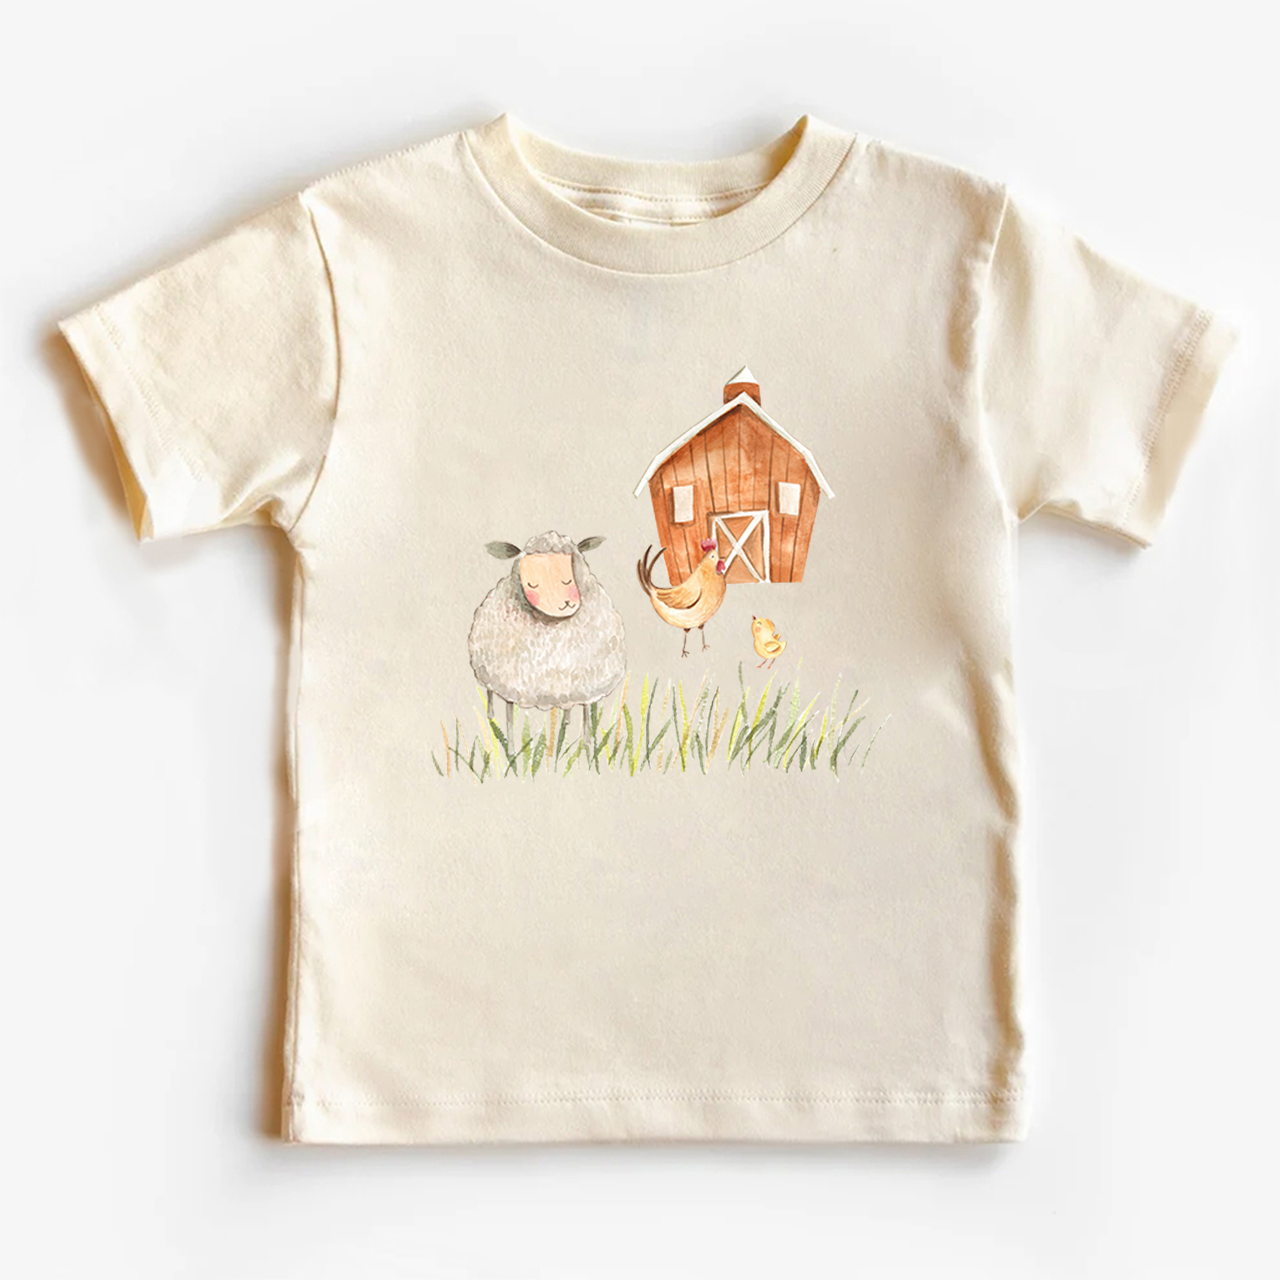 Lamb's Home Shirt For Kids